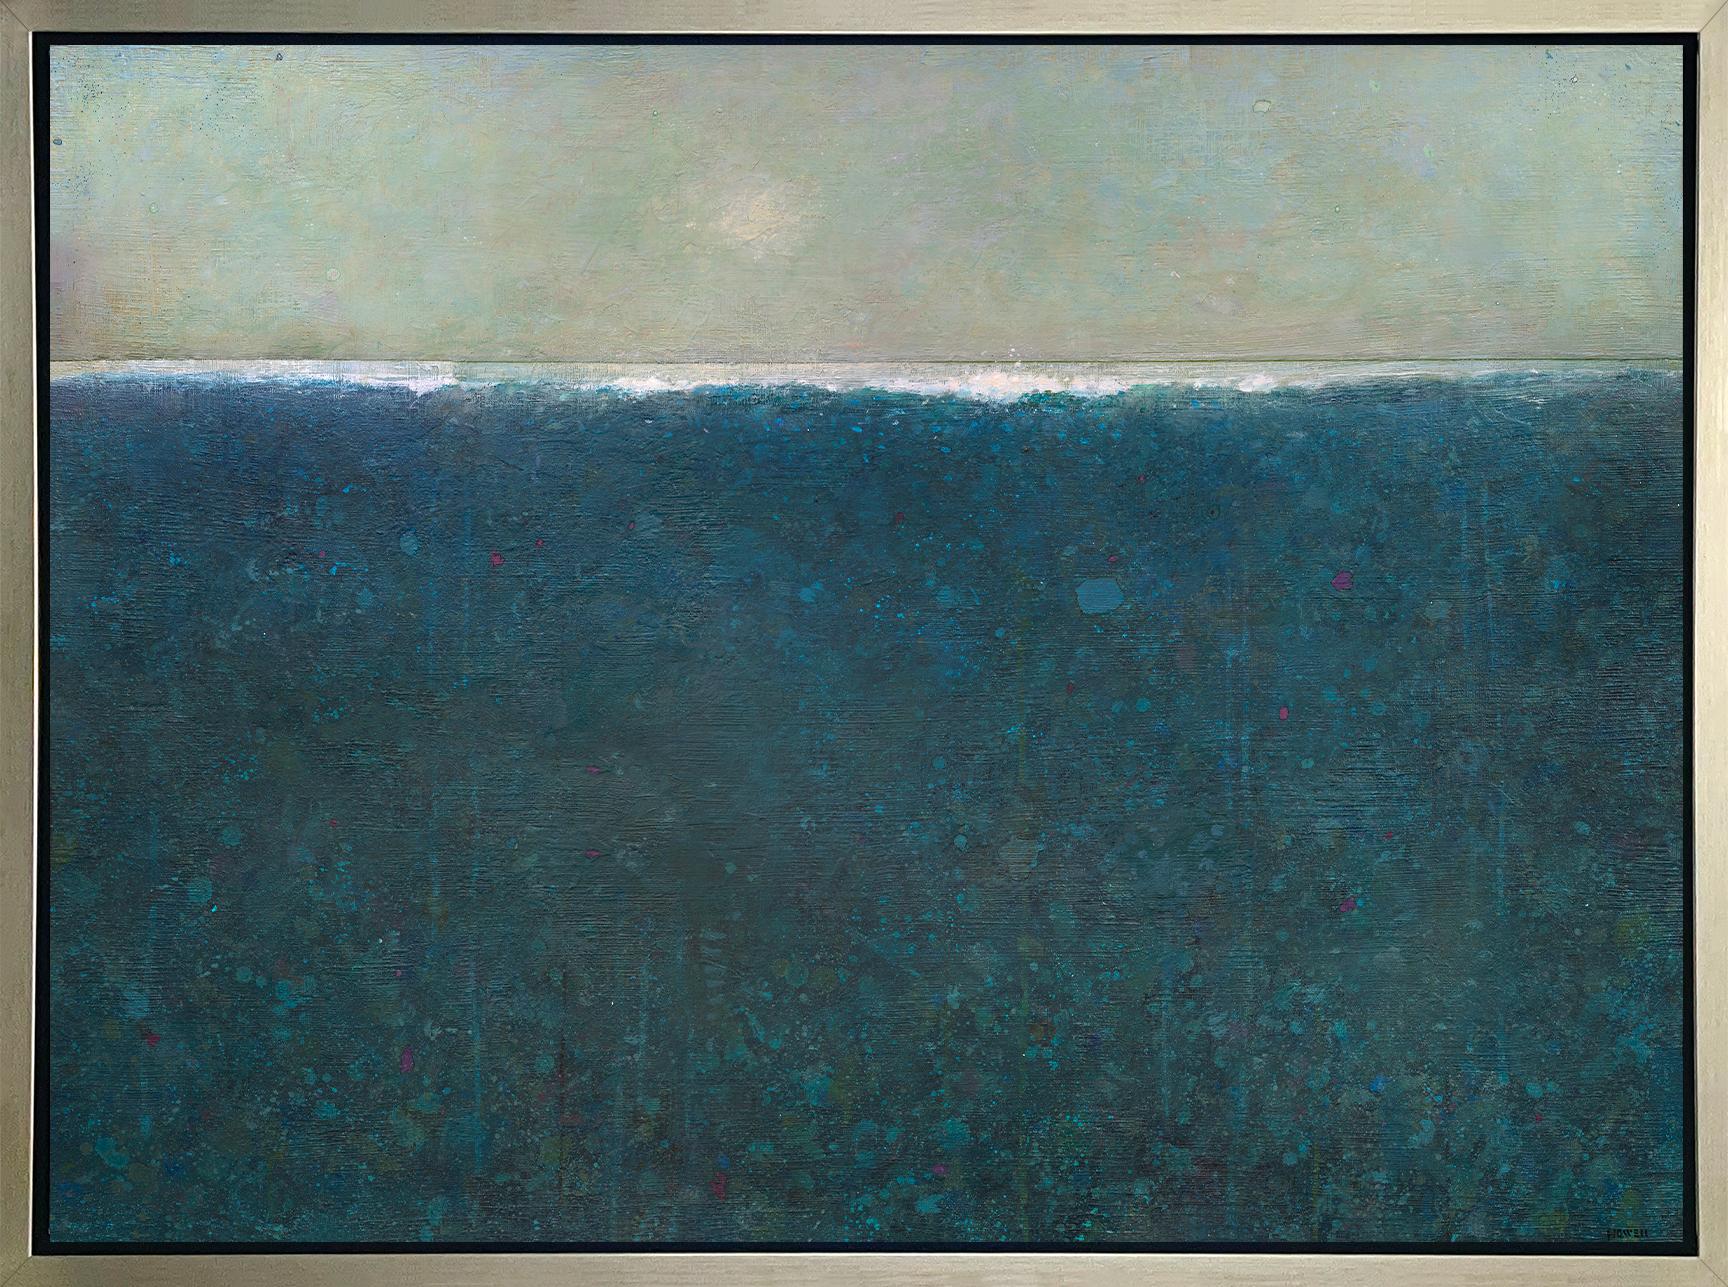 Abstract Print Elwood Howell - "Ocean,"" Tirage giclée en édition limitée, 61 x 81 cm